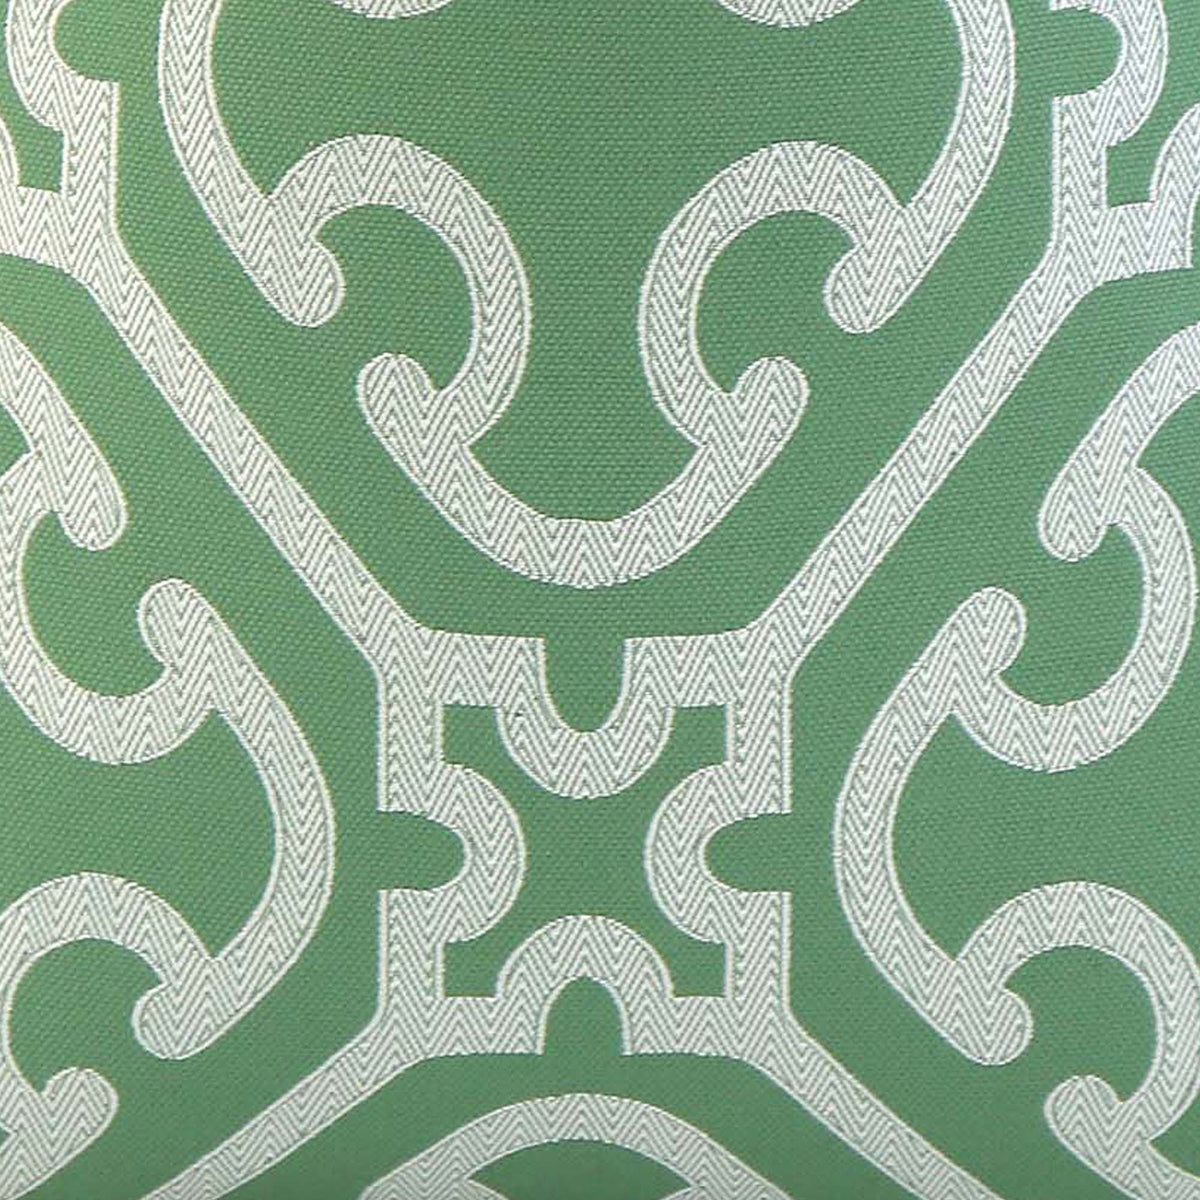 Ailin Lattice Weave Jade / 4x4 inch Fabric Swatch